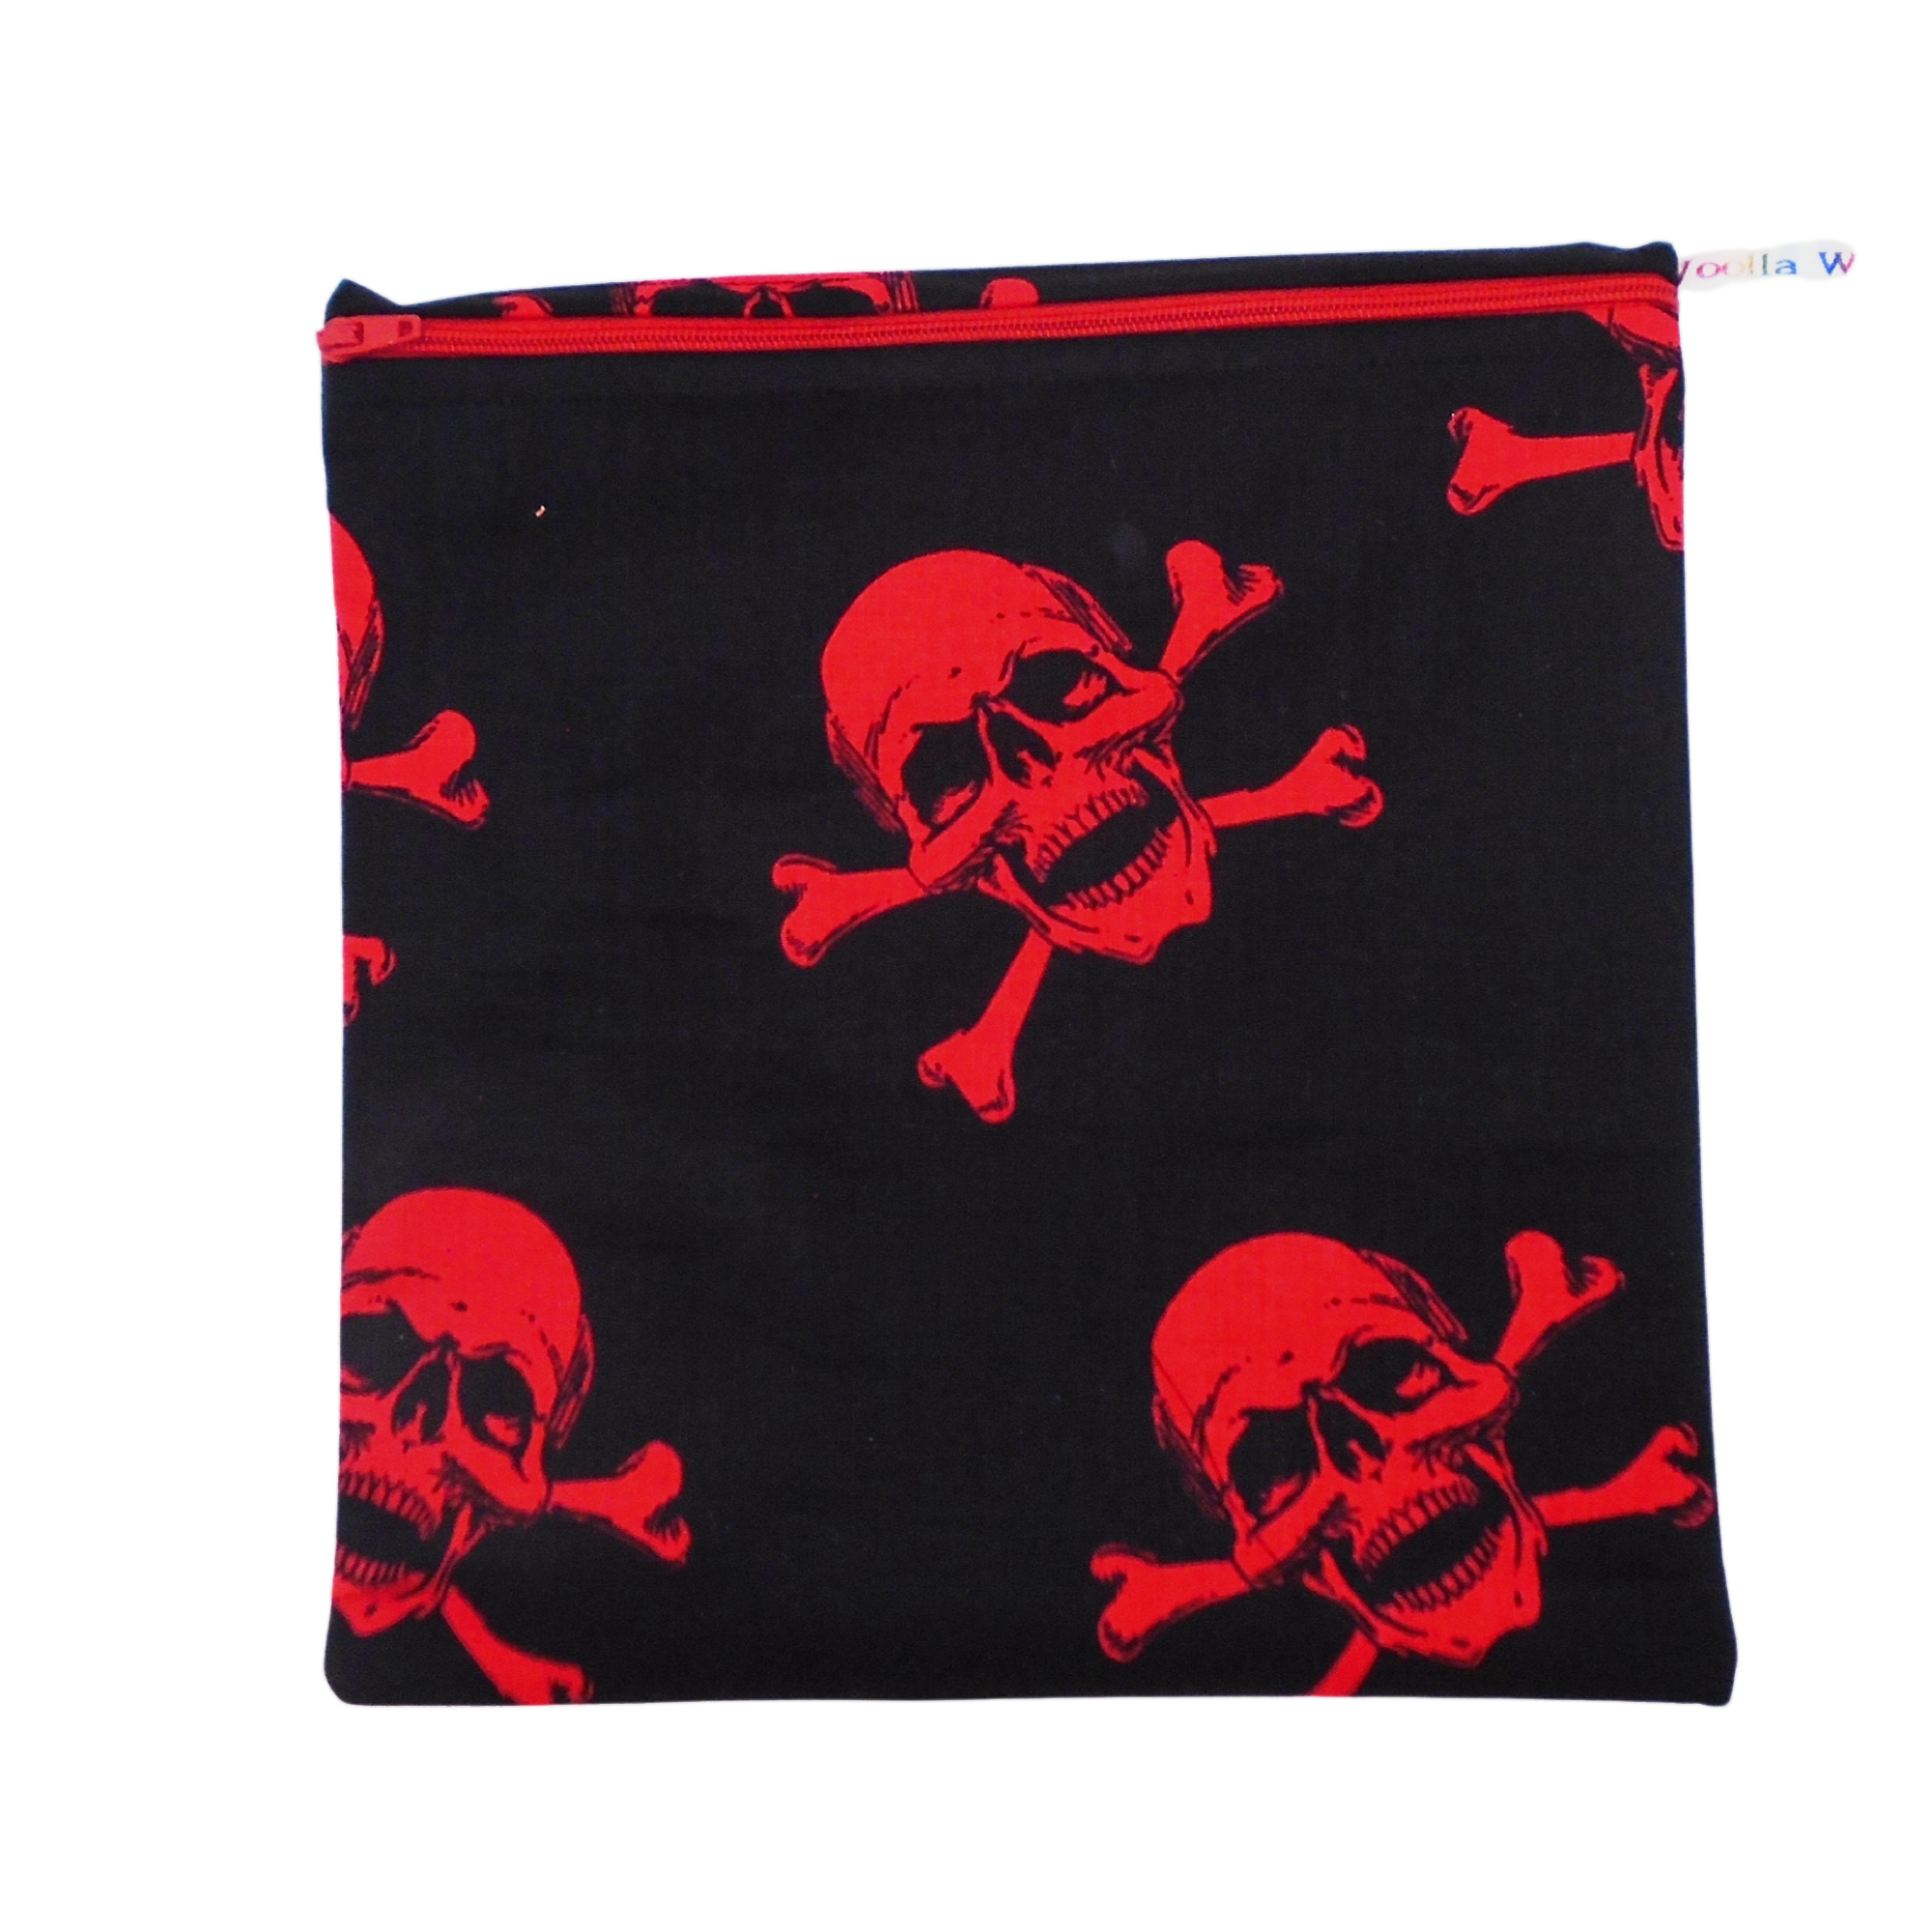 Big Red Skull & Crossbones - Large Poppins Pouch - Waterproof, Washable, Food Safe, Vegan, Lined Zip Bag